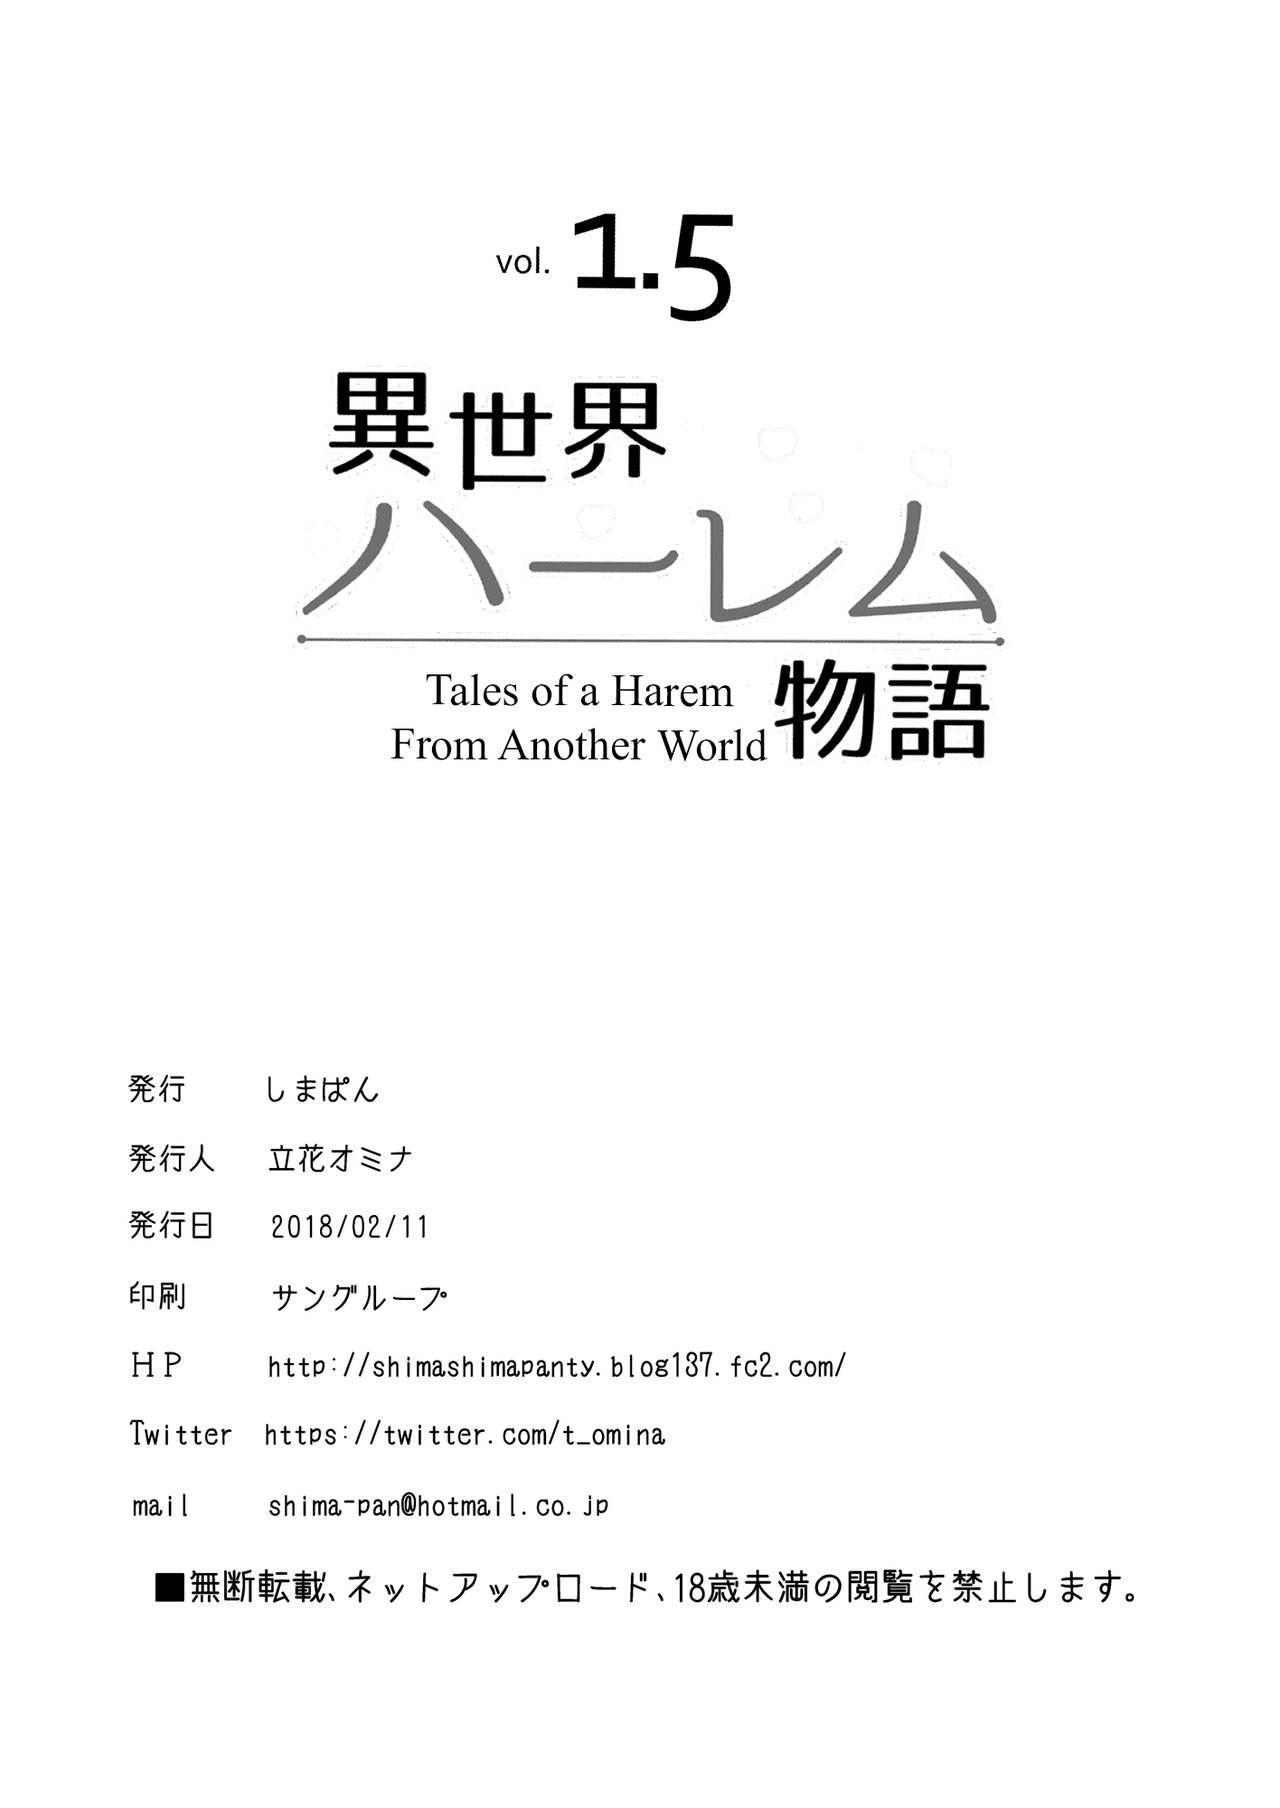 Outdoor Isekai Harem Monogatari - Tales of Harem Vol. 1.5｜Tales of a Harem from Another World Vol. 1.5 - Original Socks - Page 8